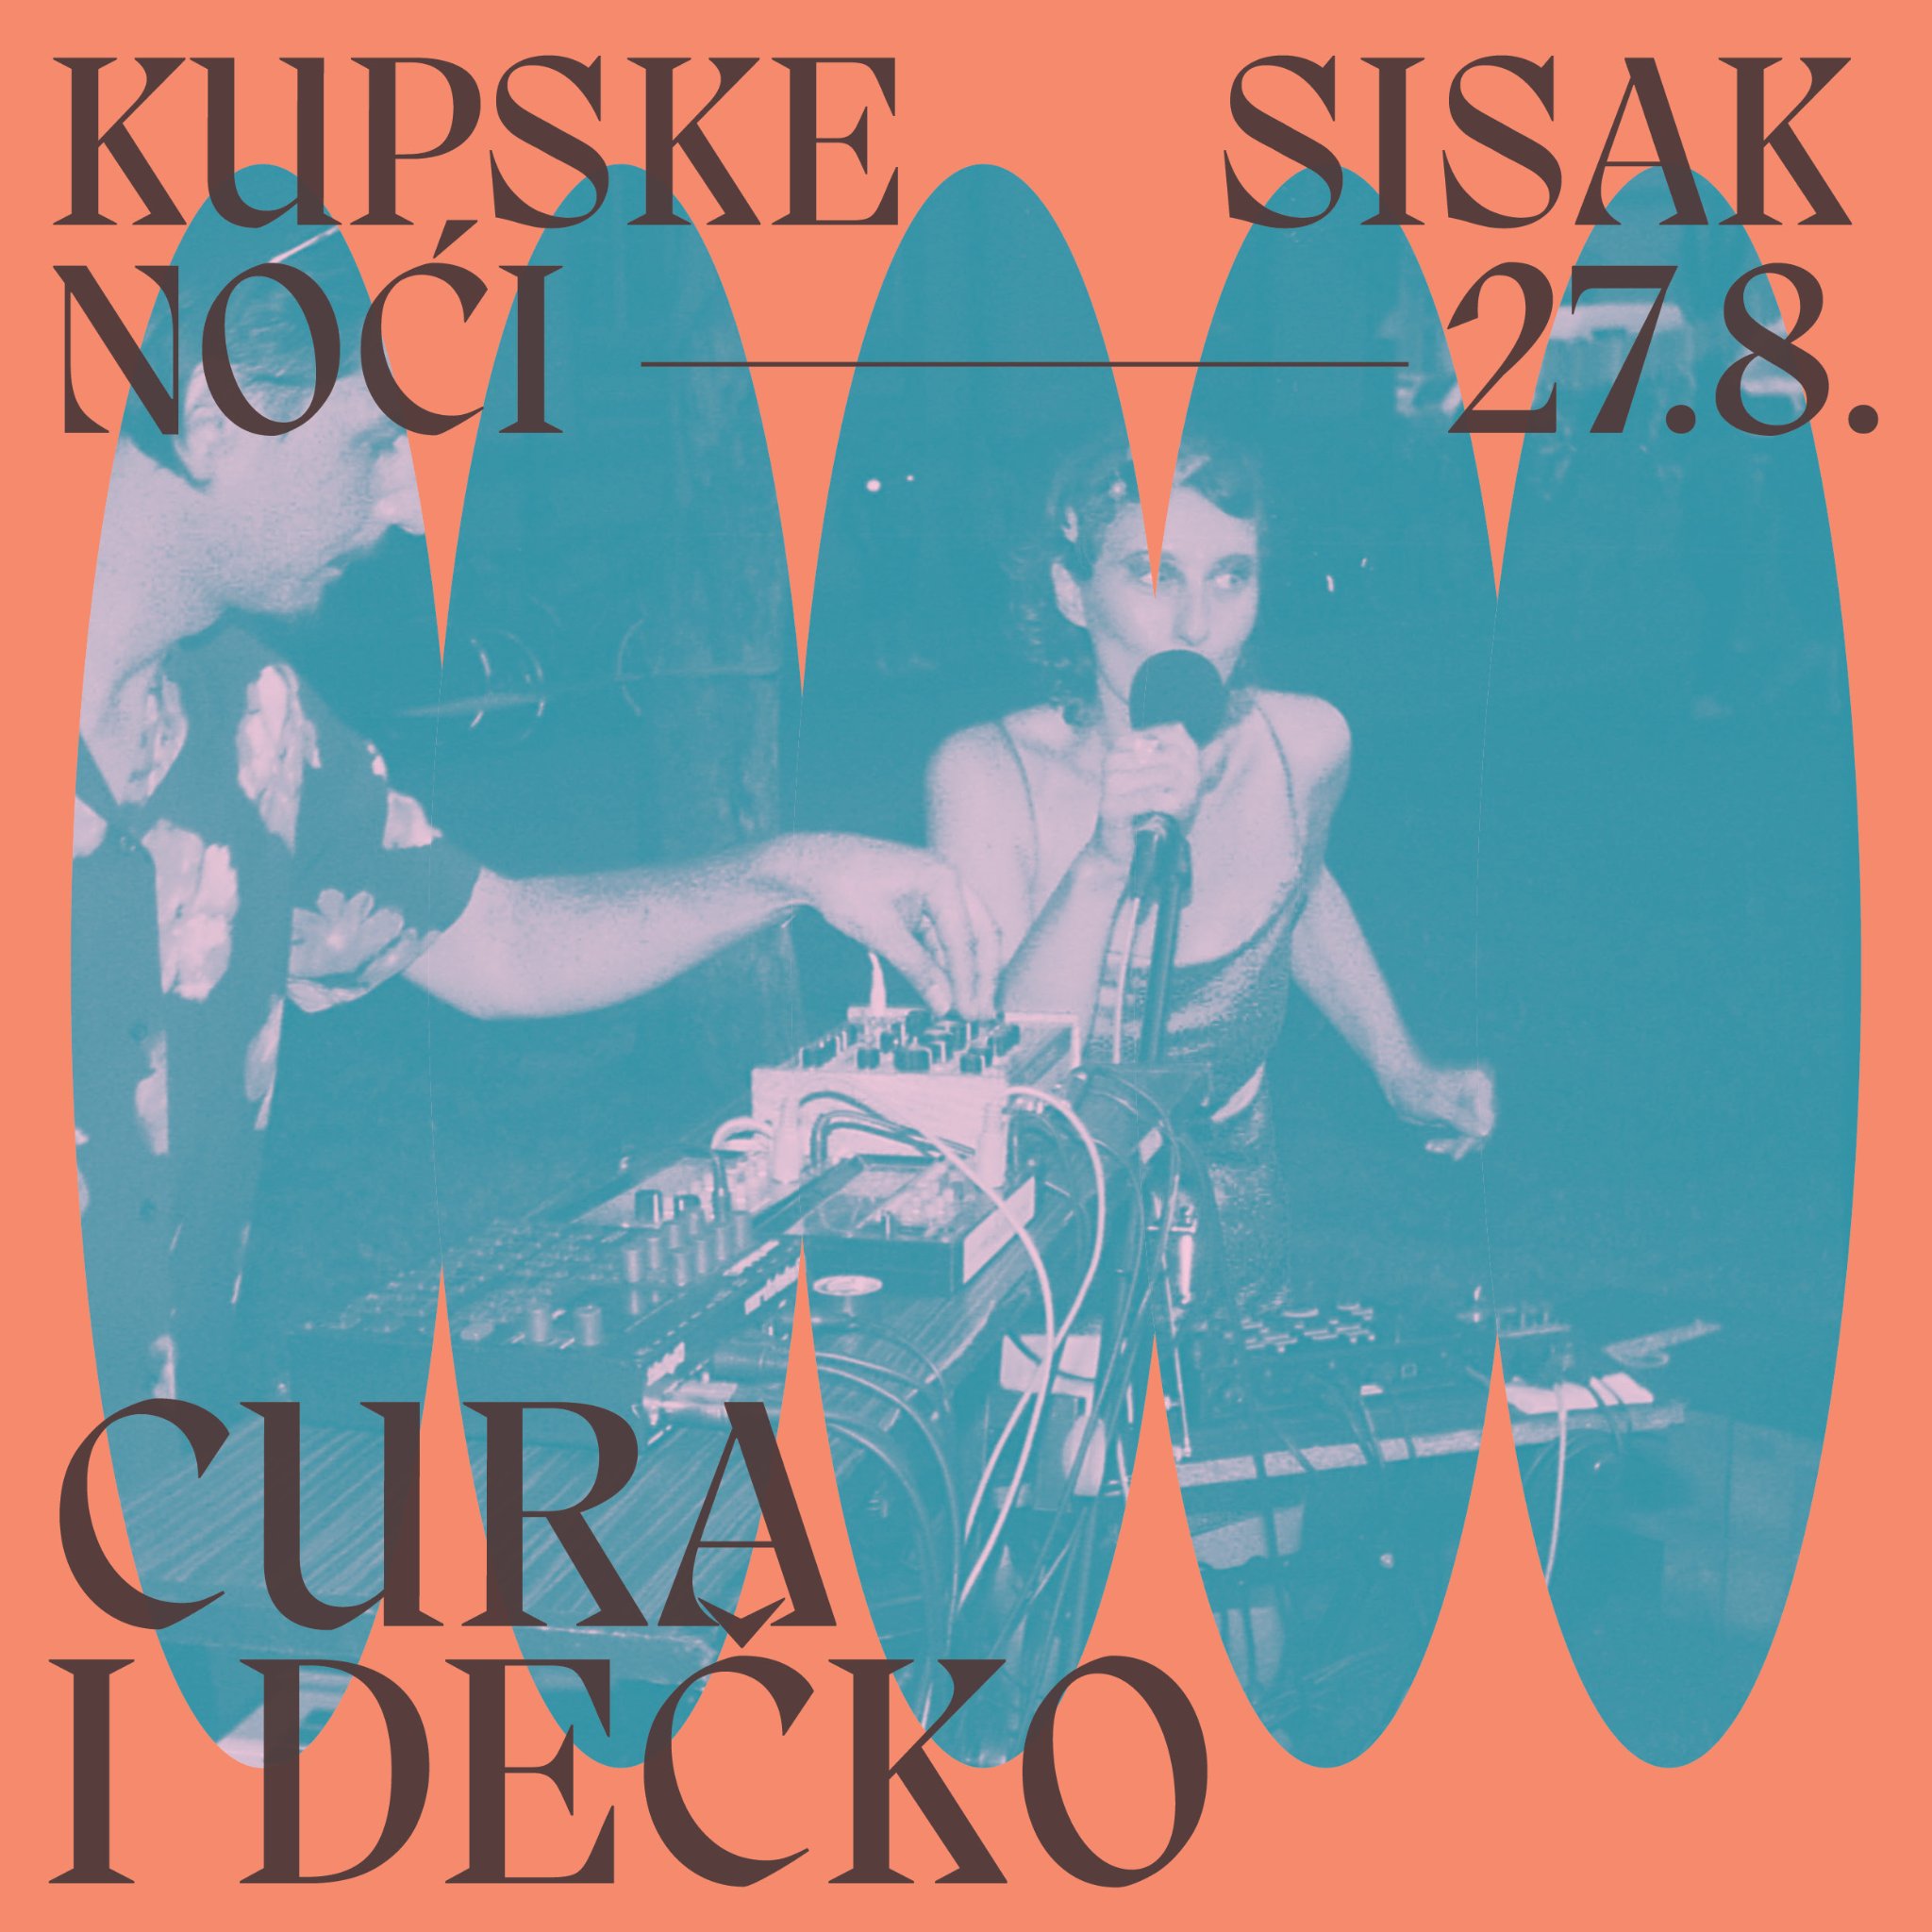 You are currently viewing Kupske noći/subota 27.8./koncerti